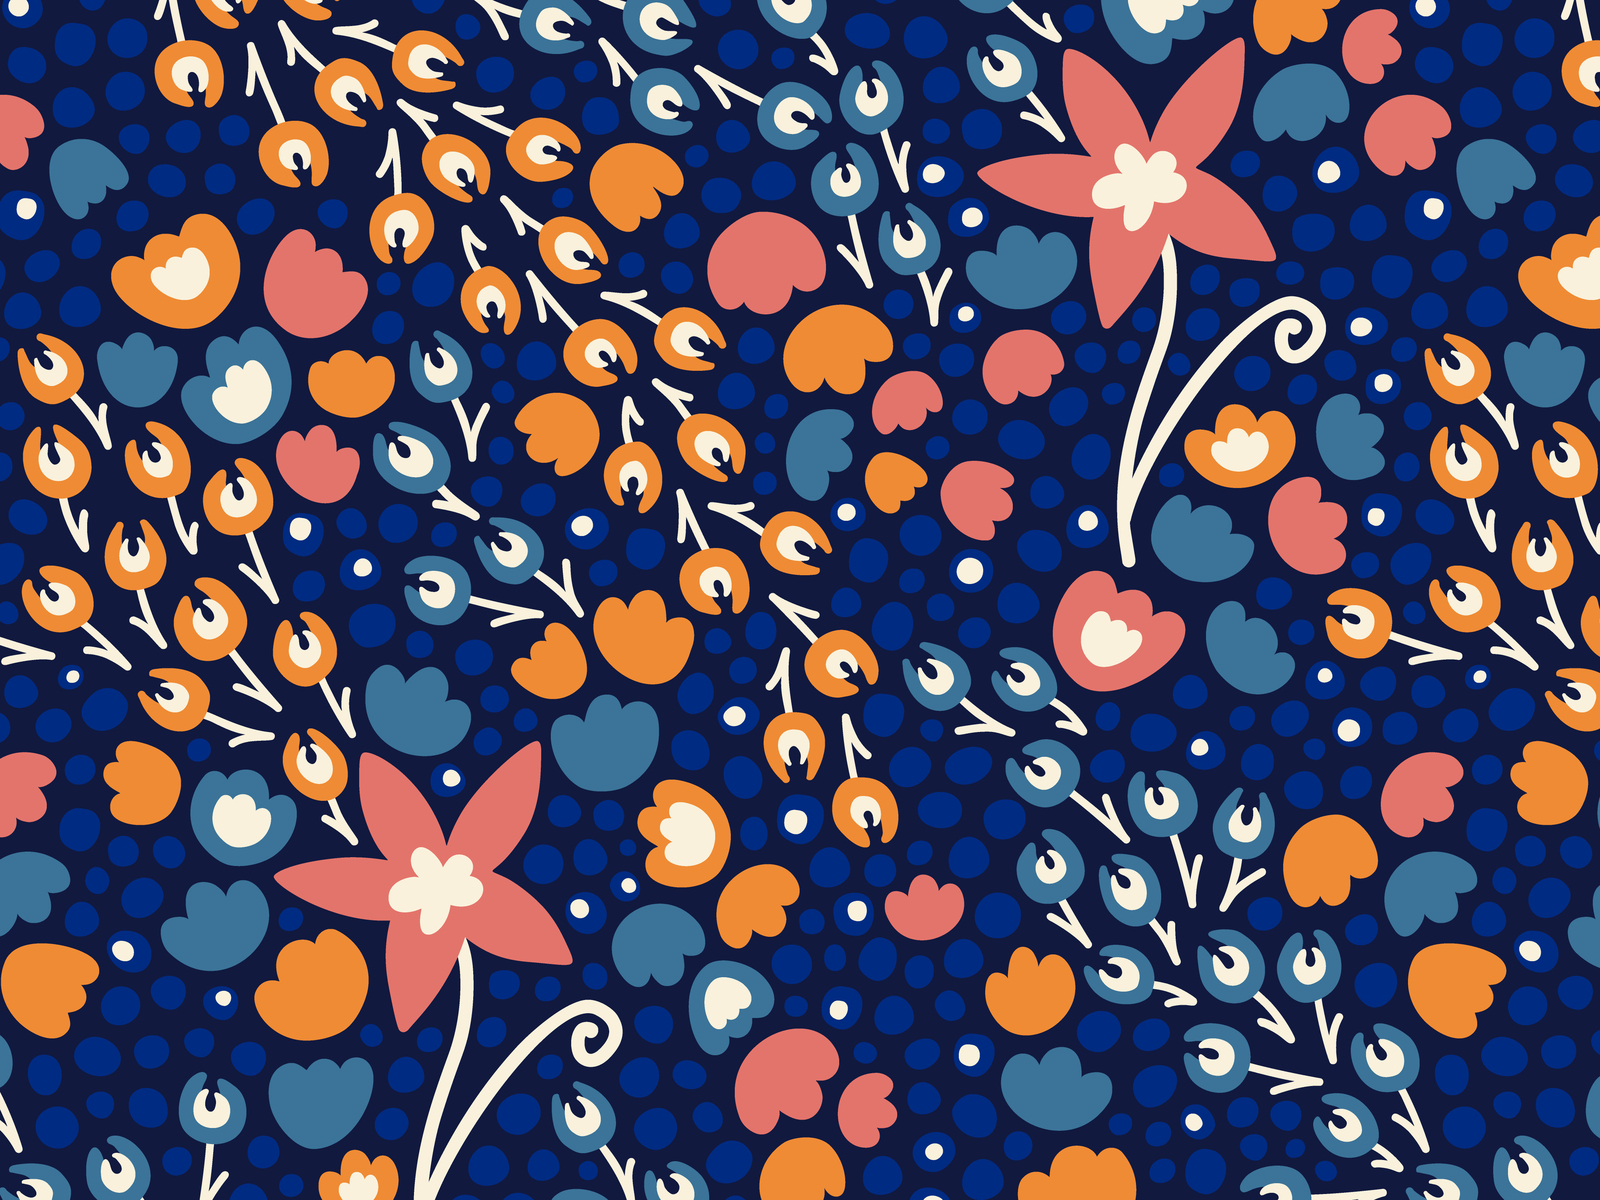 Floral pattern by Olha Kozachenko on Dribbble